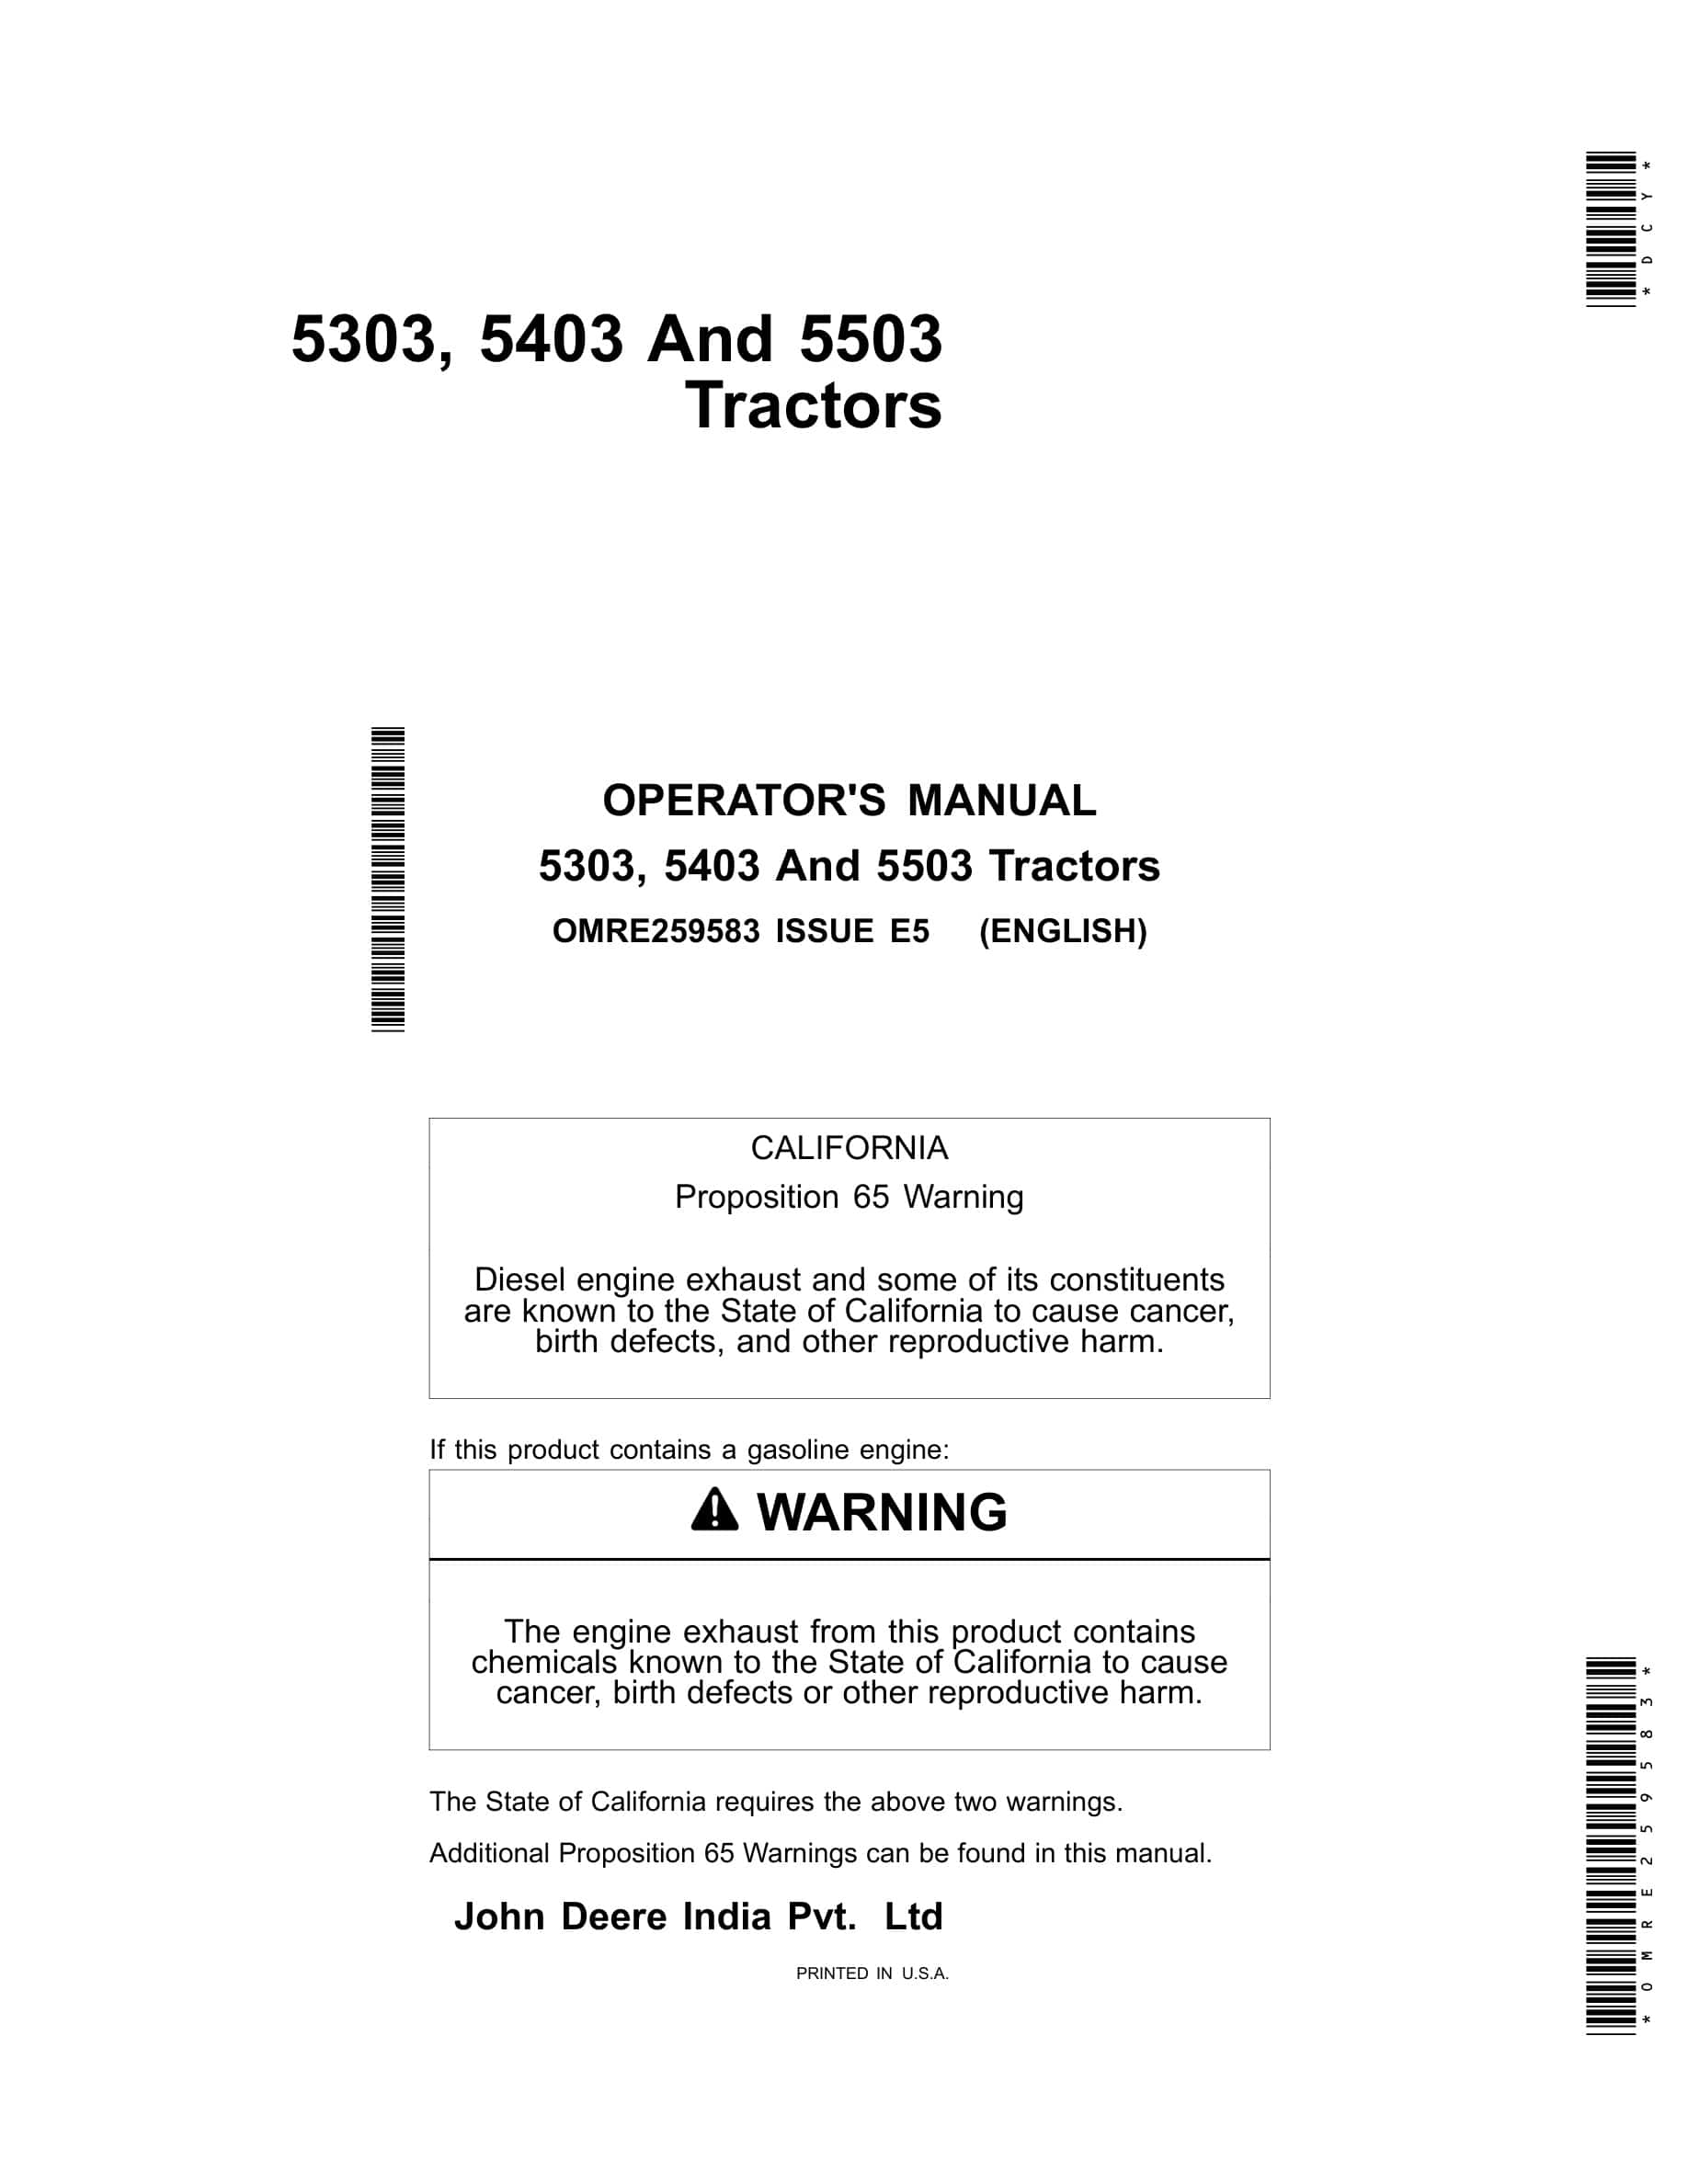 John Deere 5303, 5403 And 5503 Tractors Operator Manuals OMRE259583-1